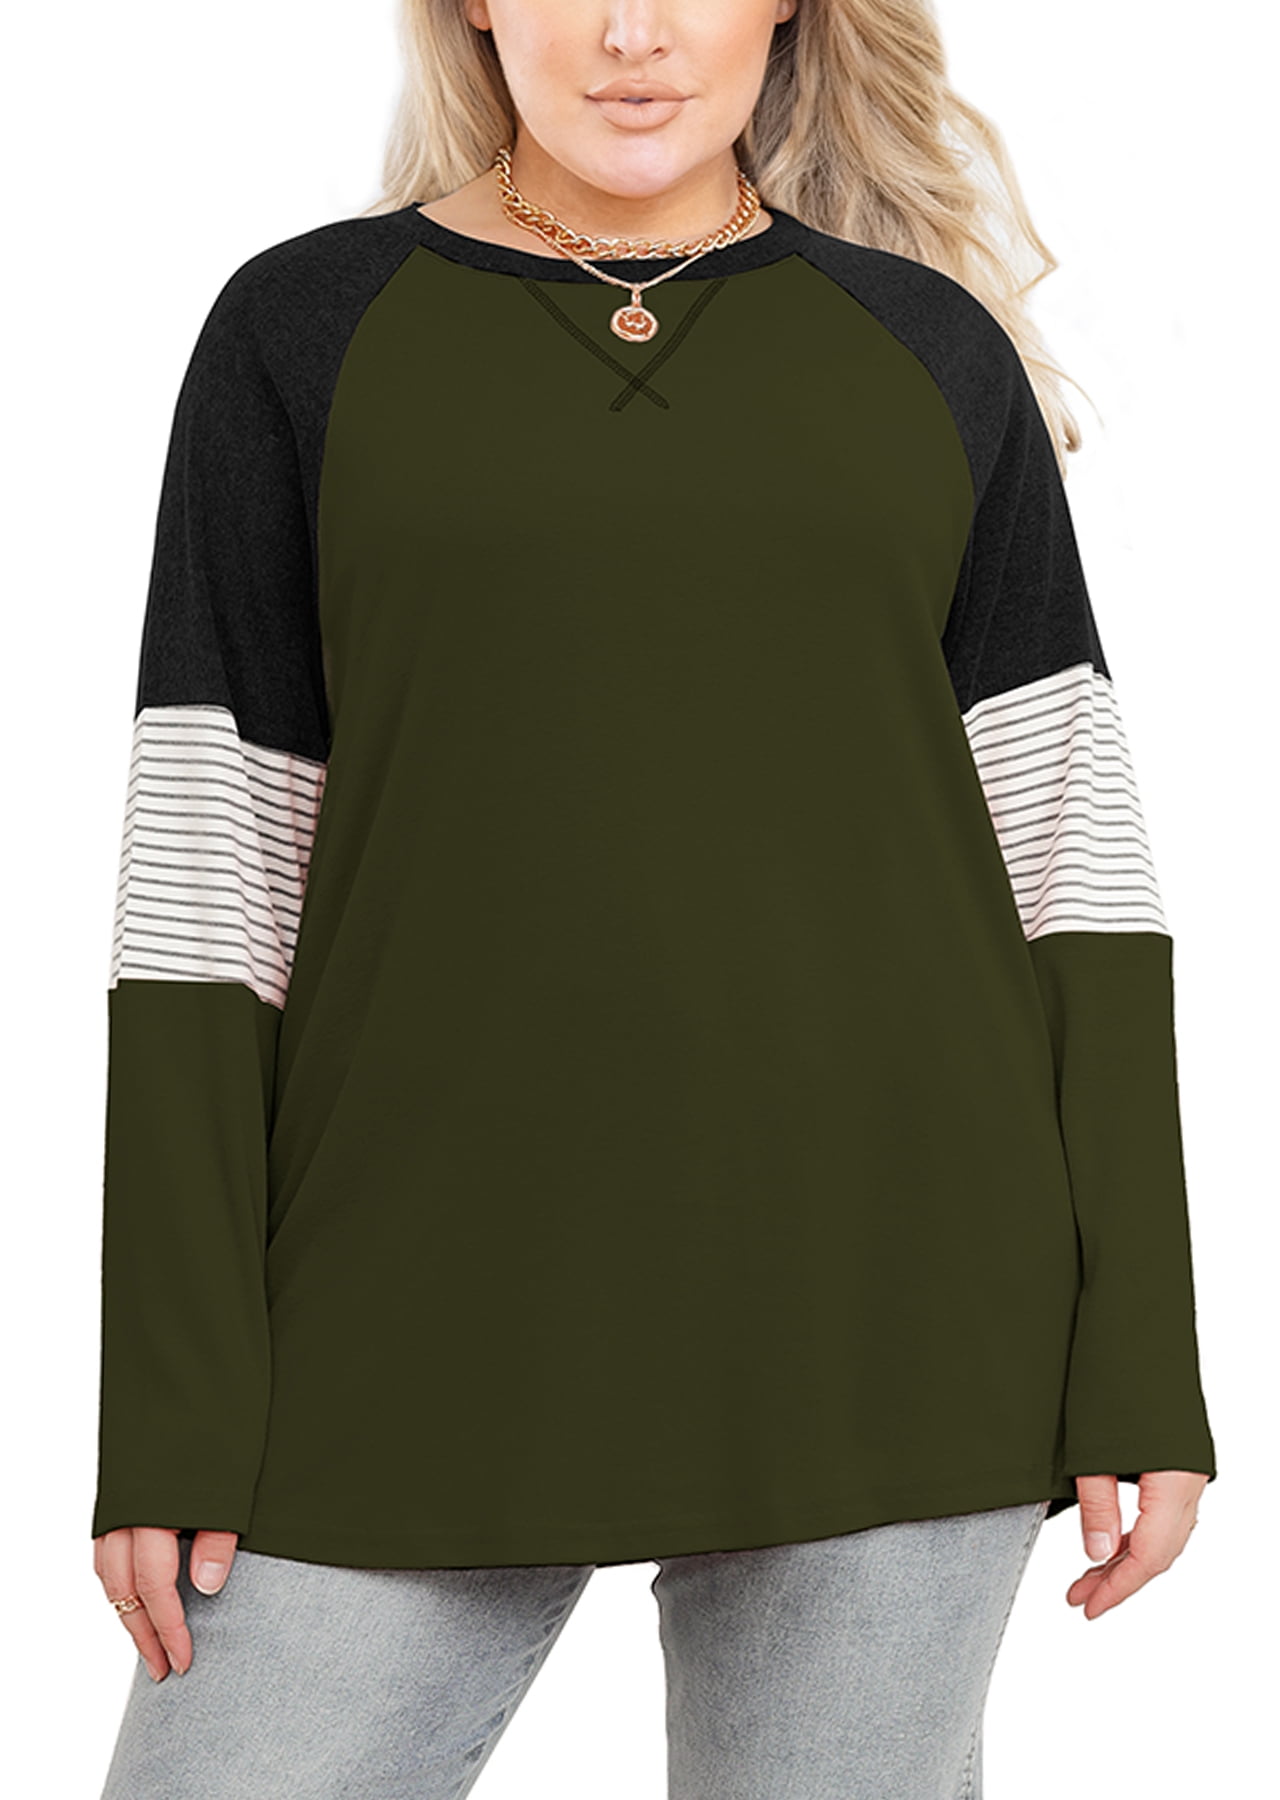 LARACE Plus Size Tops Women Pullover Sweatshirt Color Block Tee Long Sleeve Tunic Striped Raglan Shirt